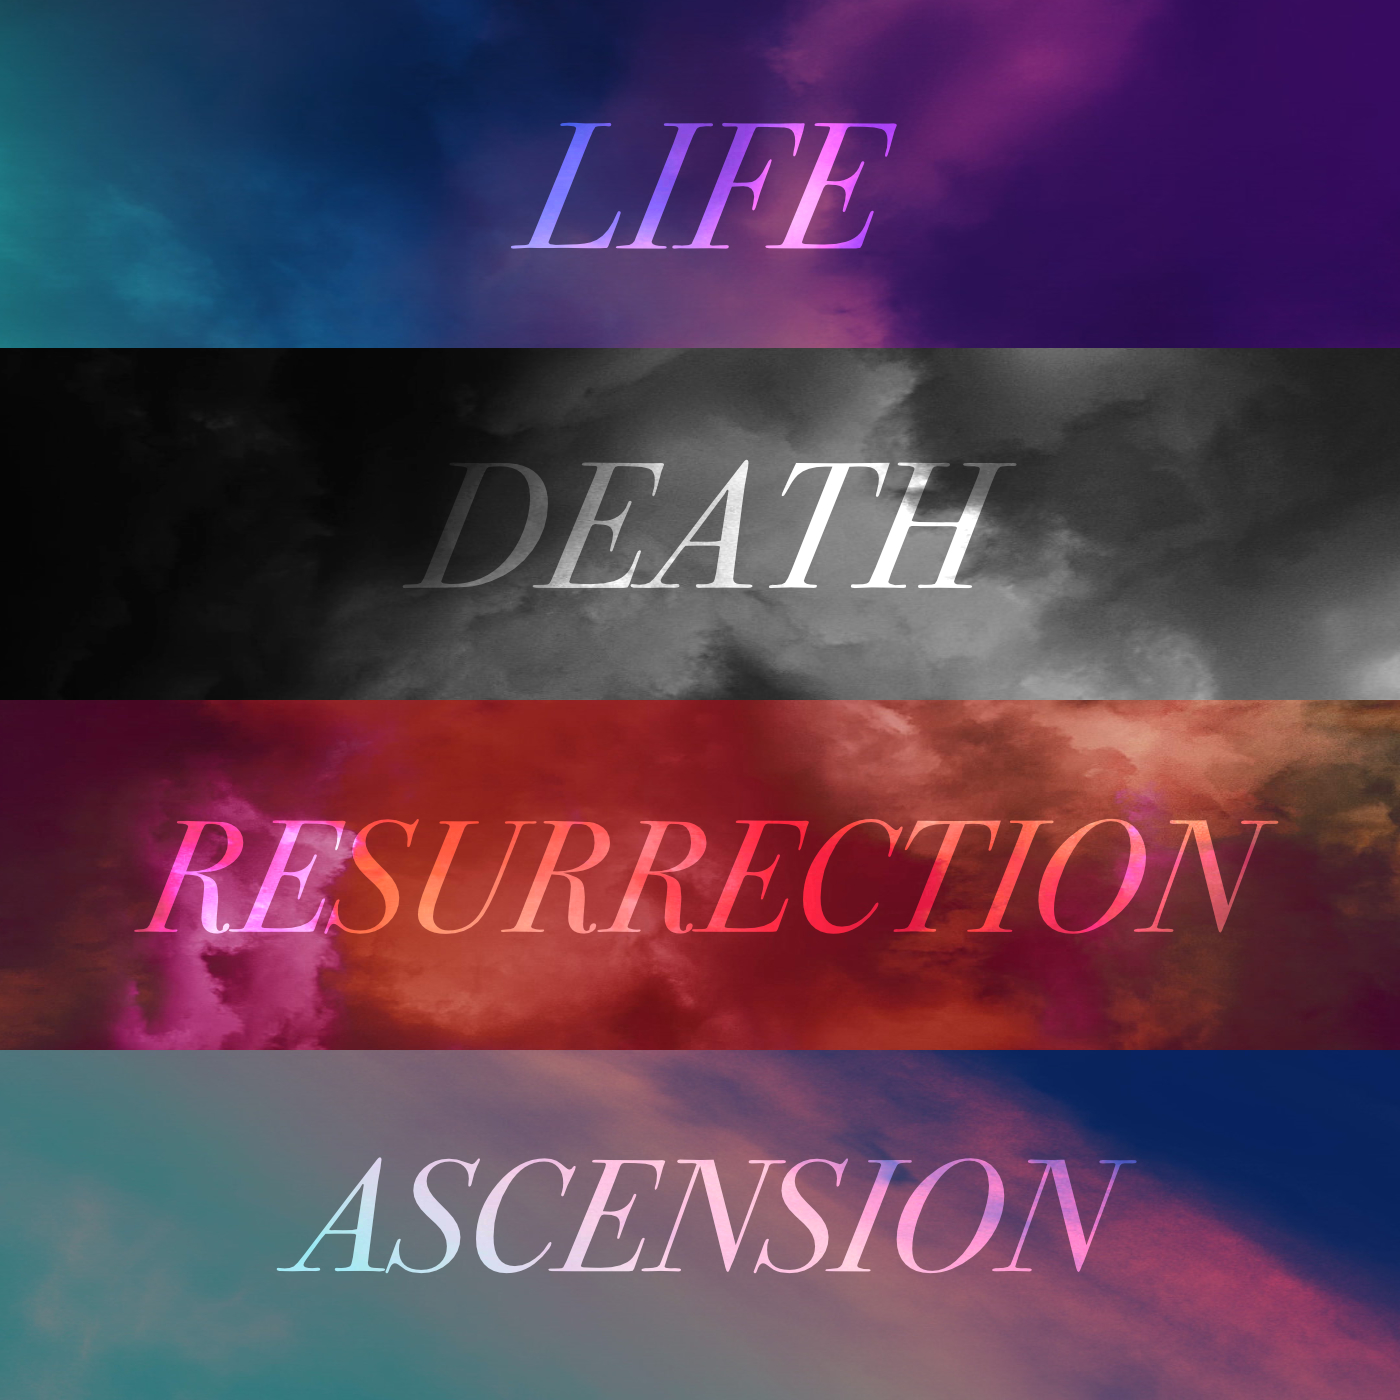 Life. Death. Resurrection. Ascension.